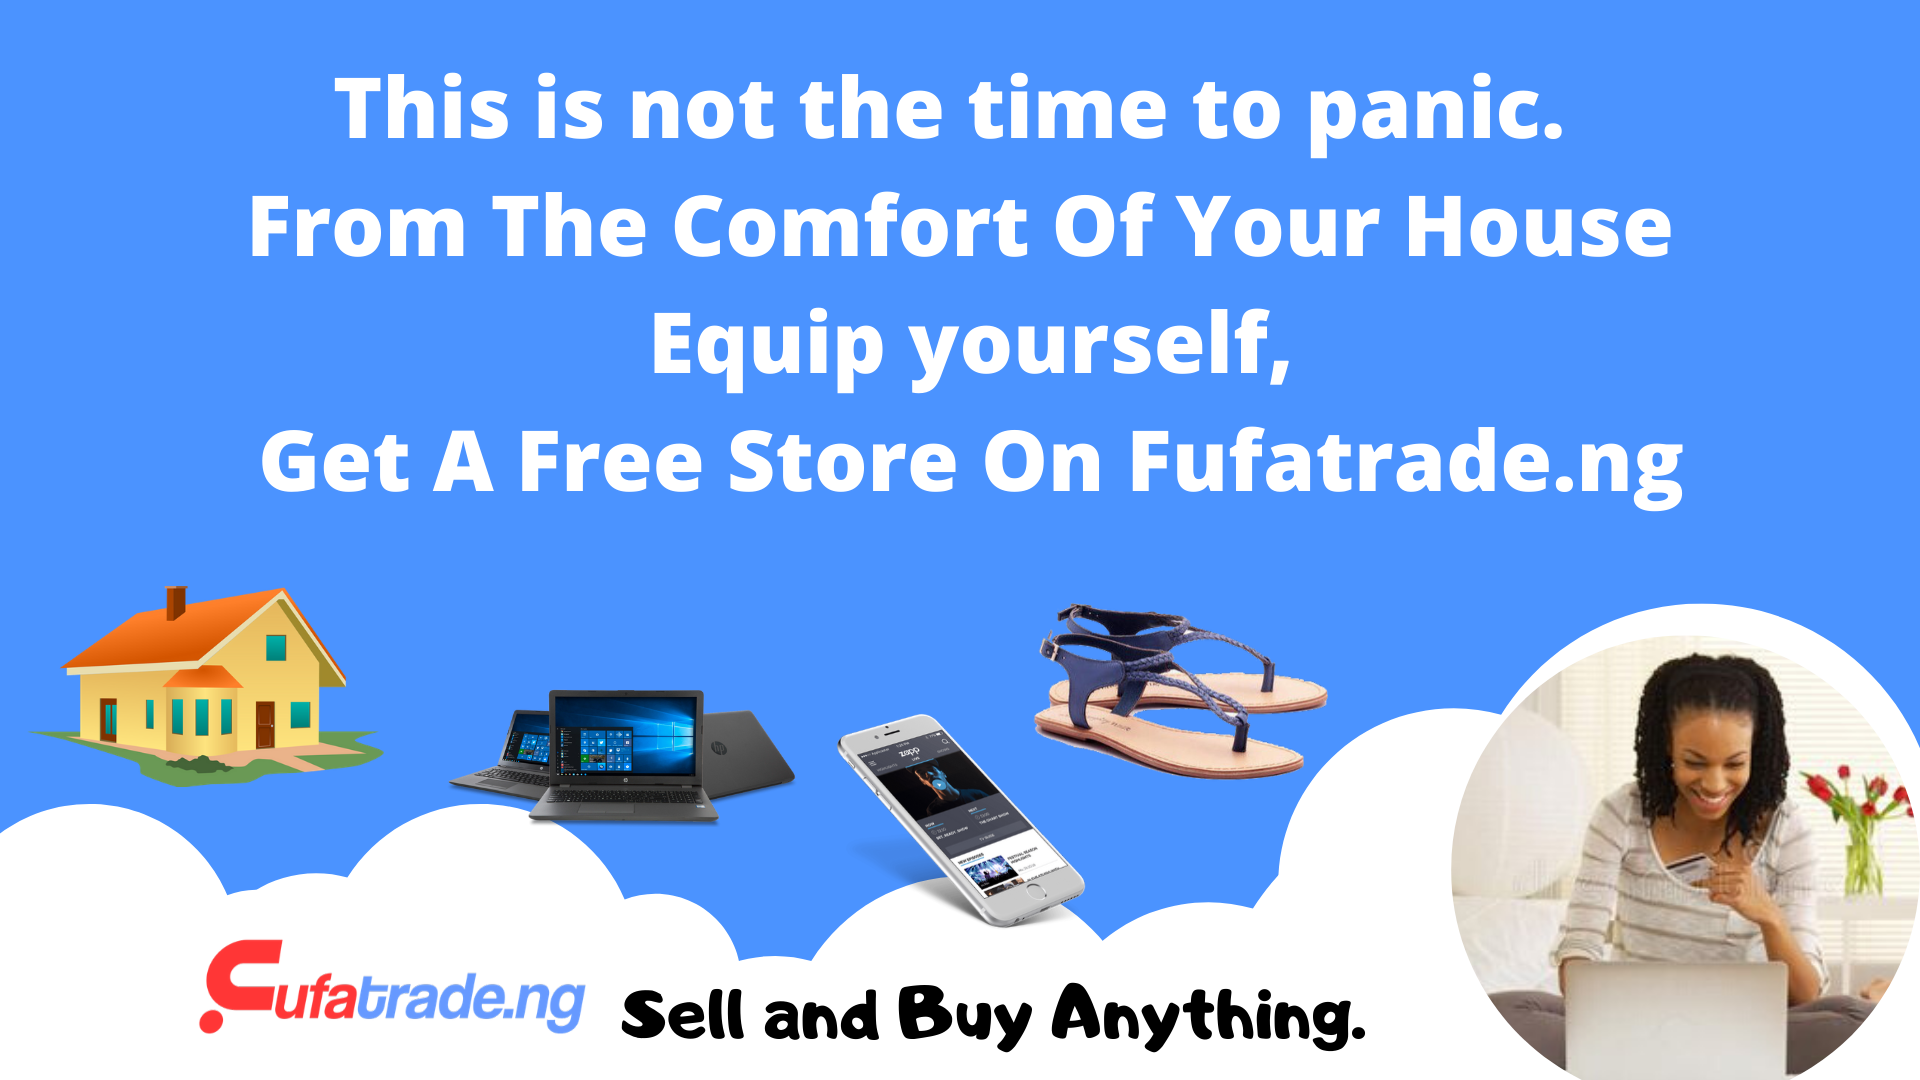 Buy on fufatrade.ng